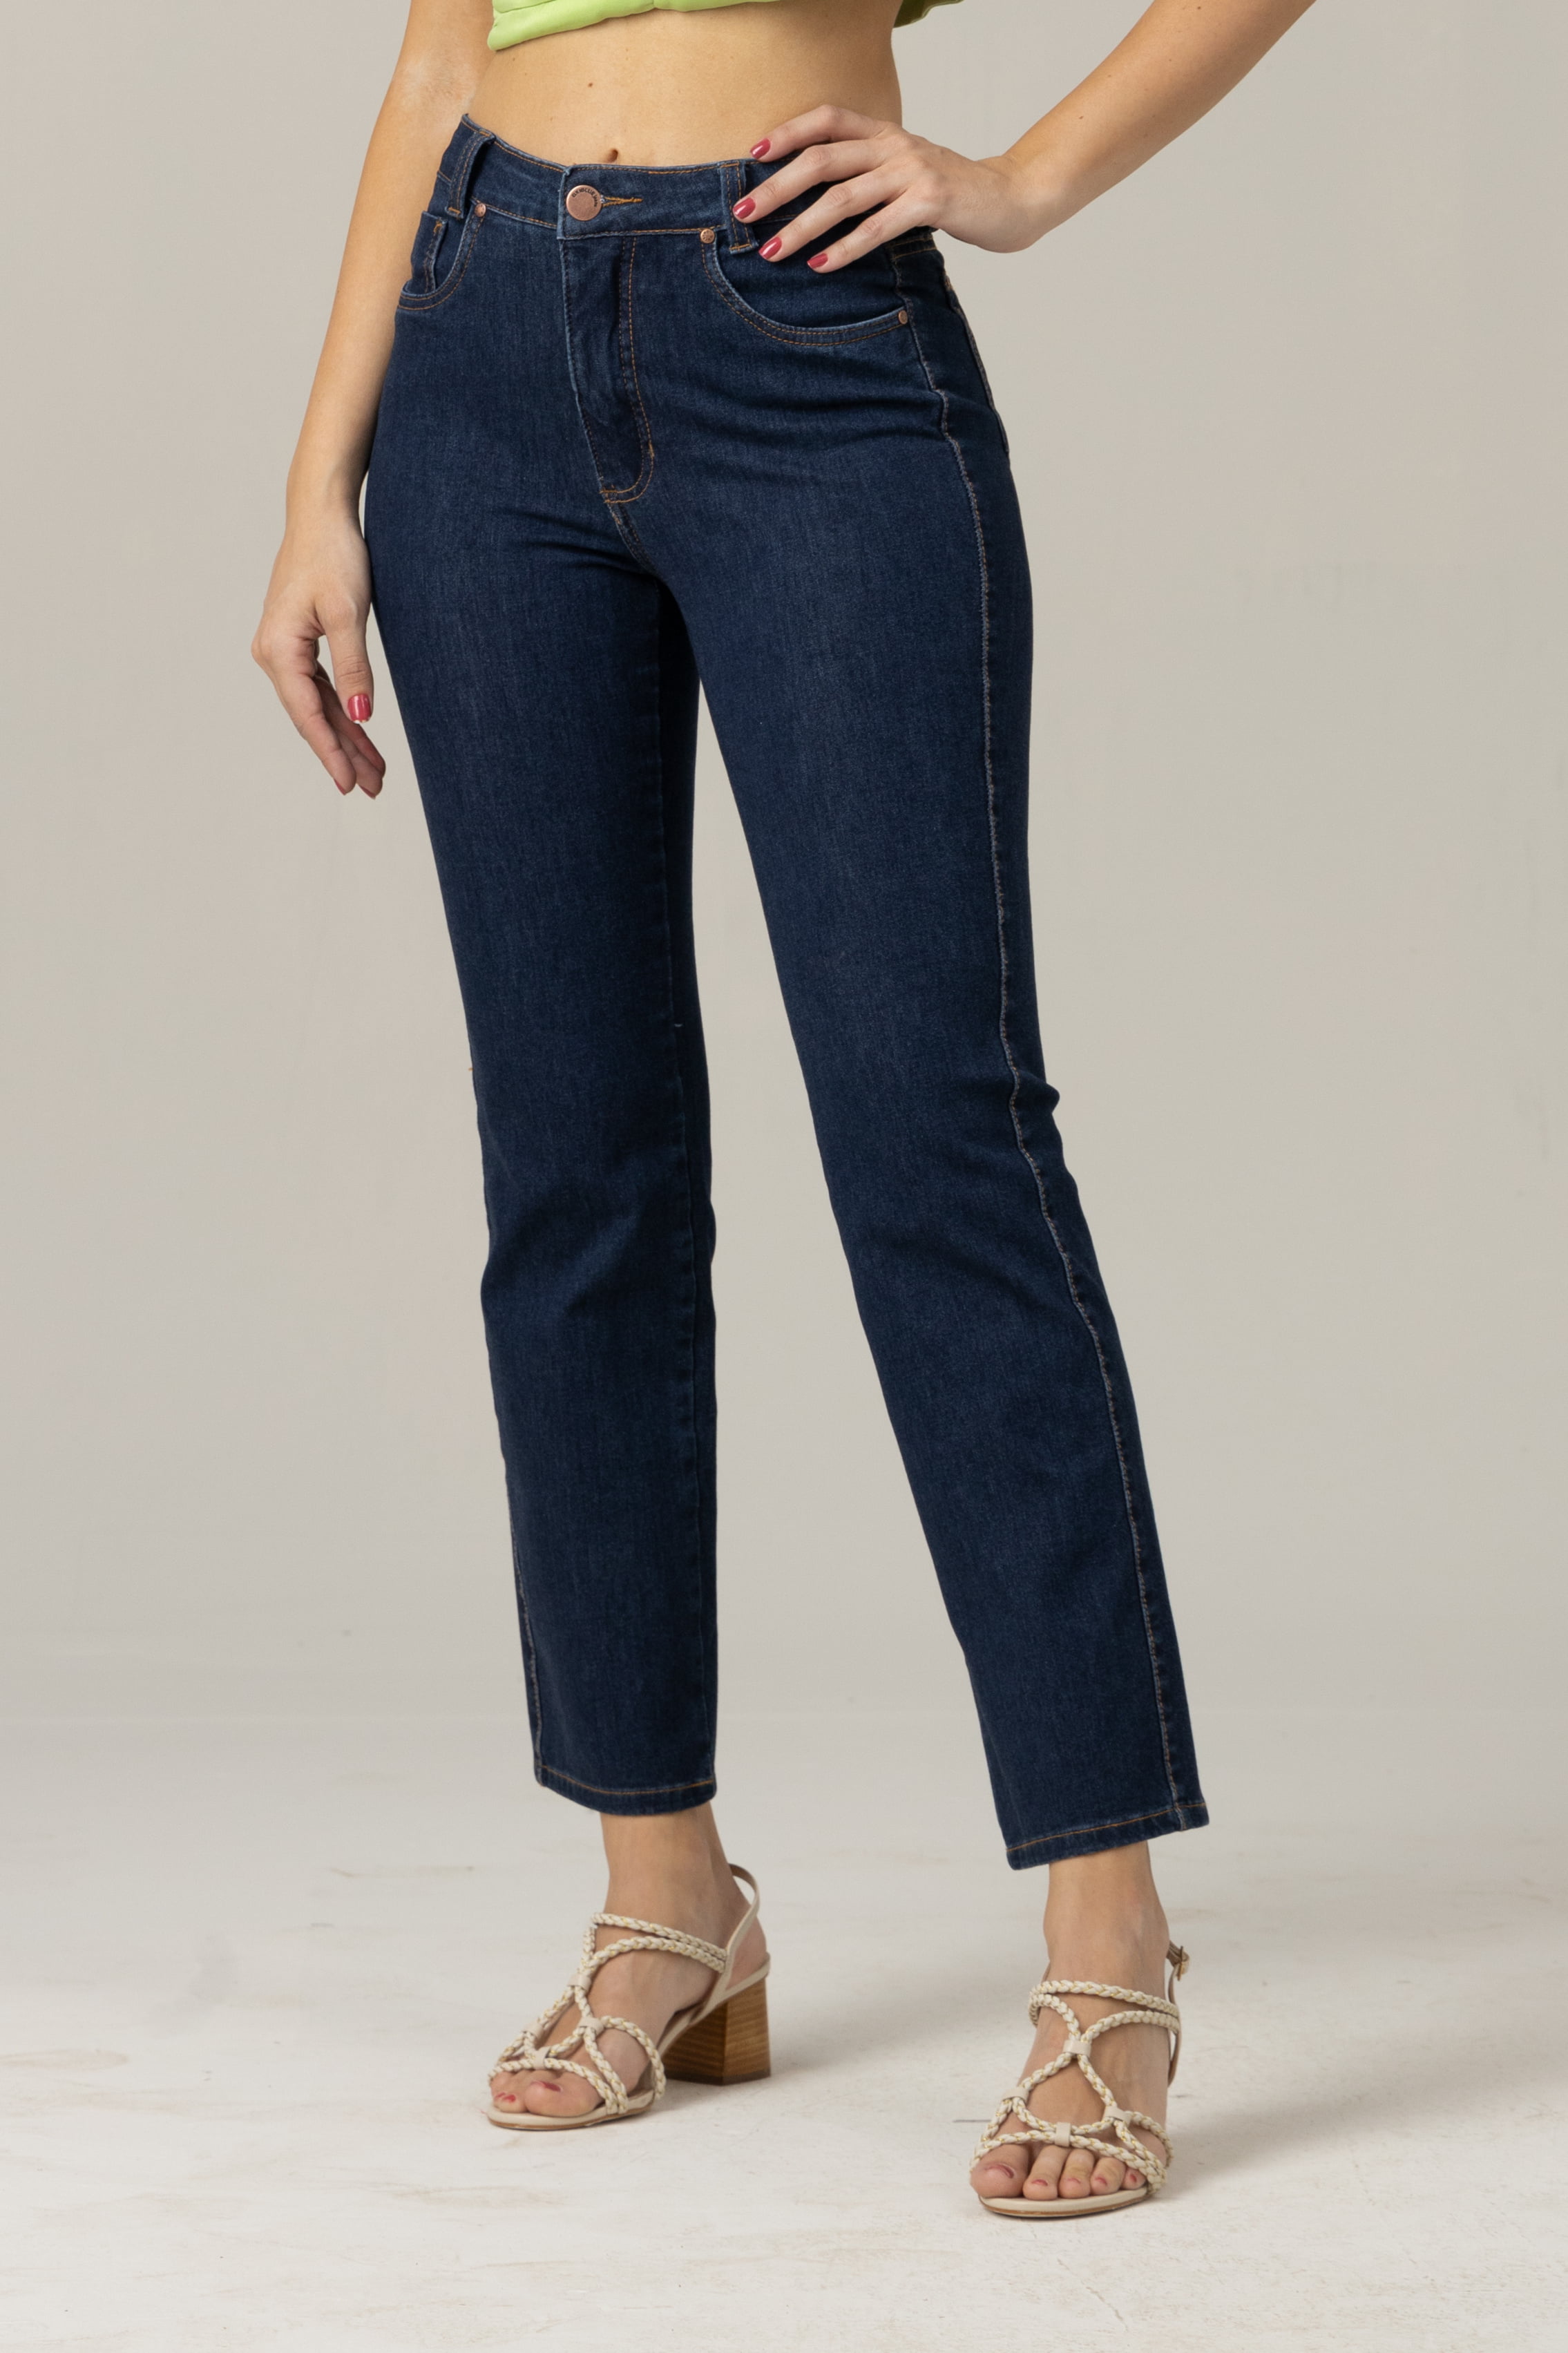 Calça Reta Preta Feminina na Oxiblue Jeans